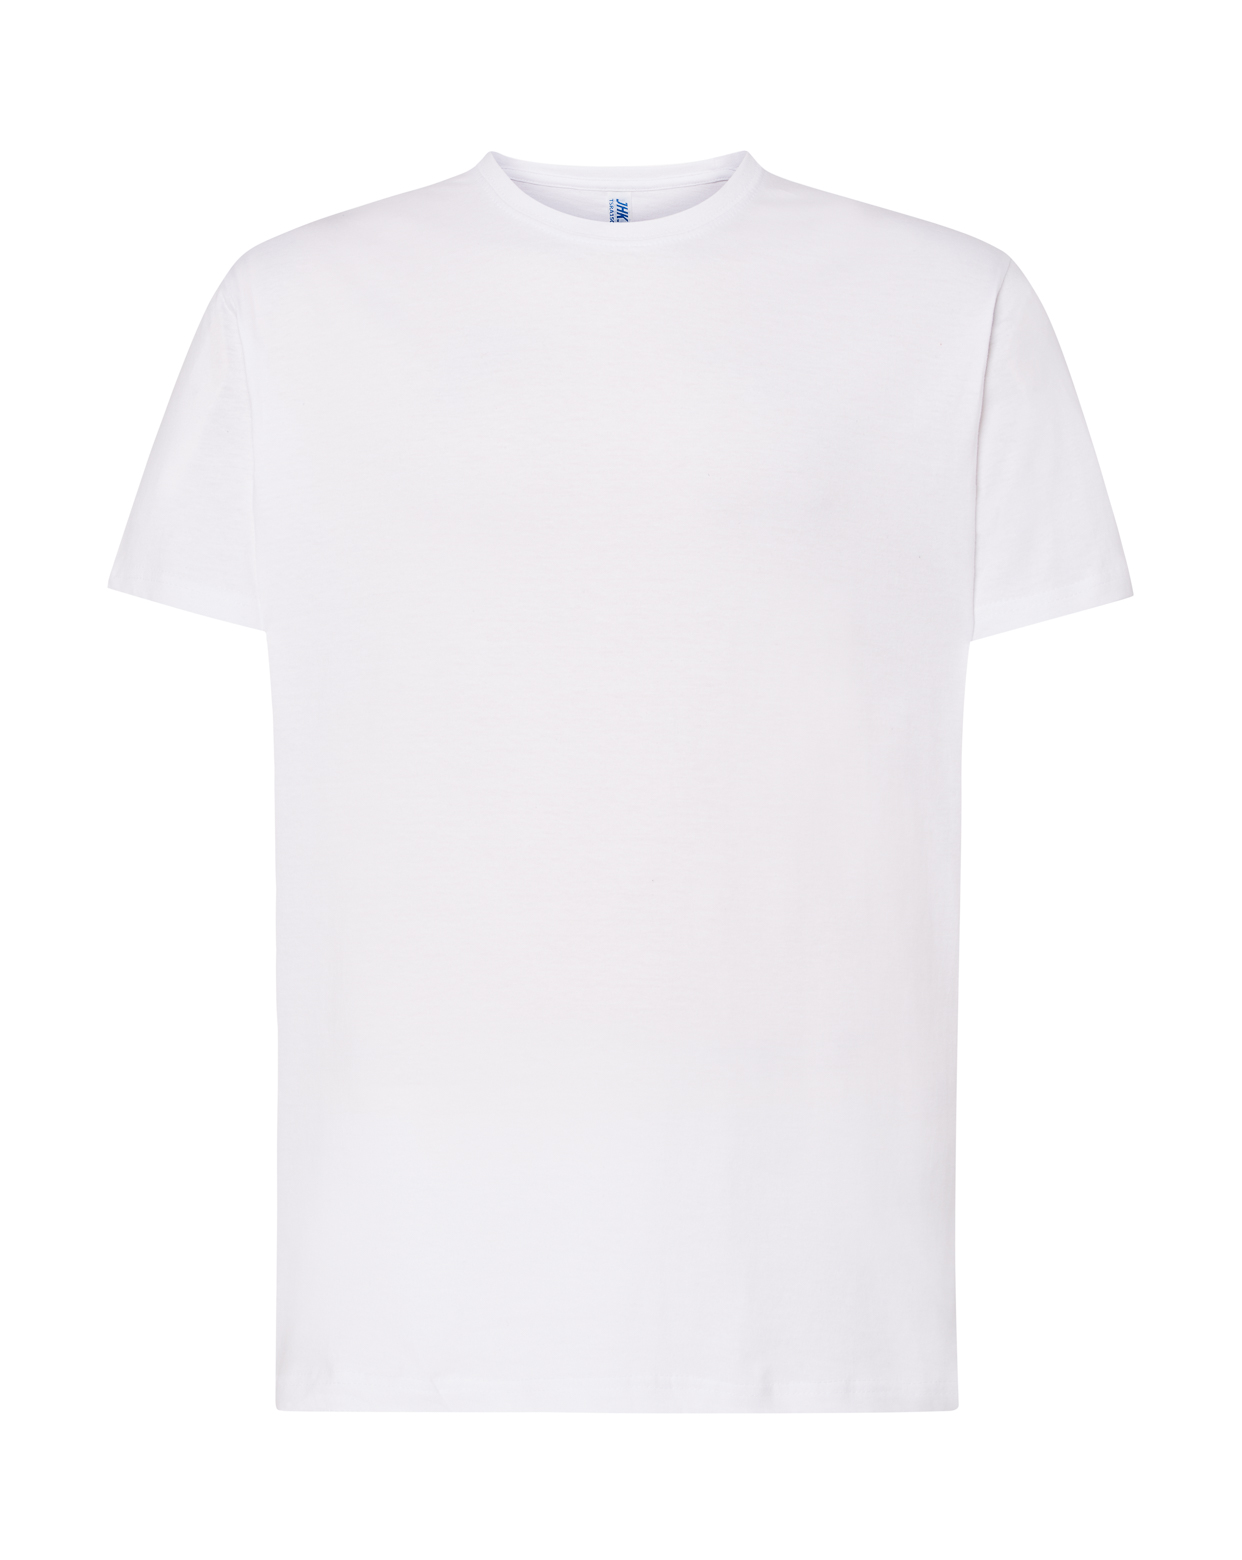 Camiseta blanca hombre